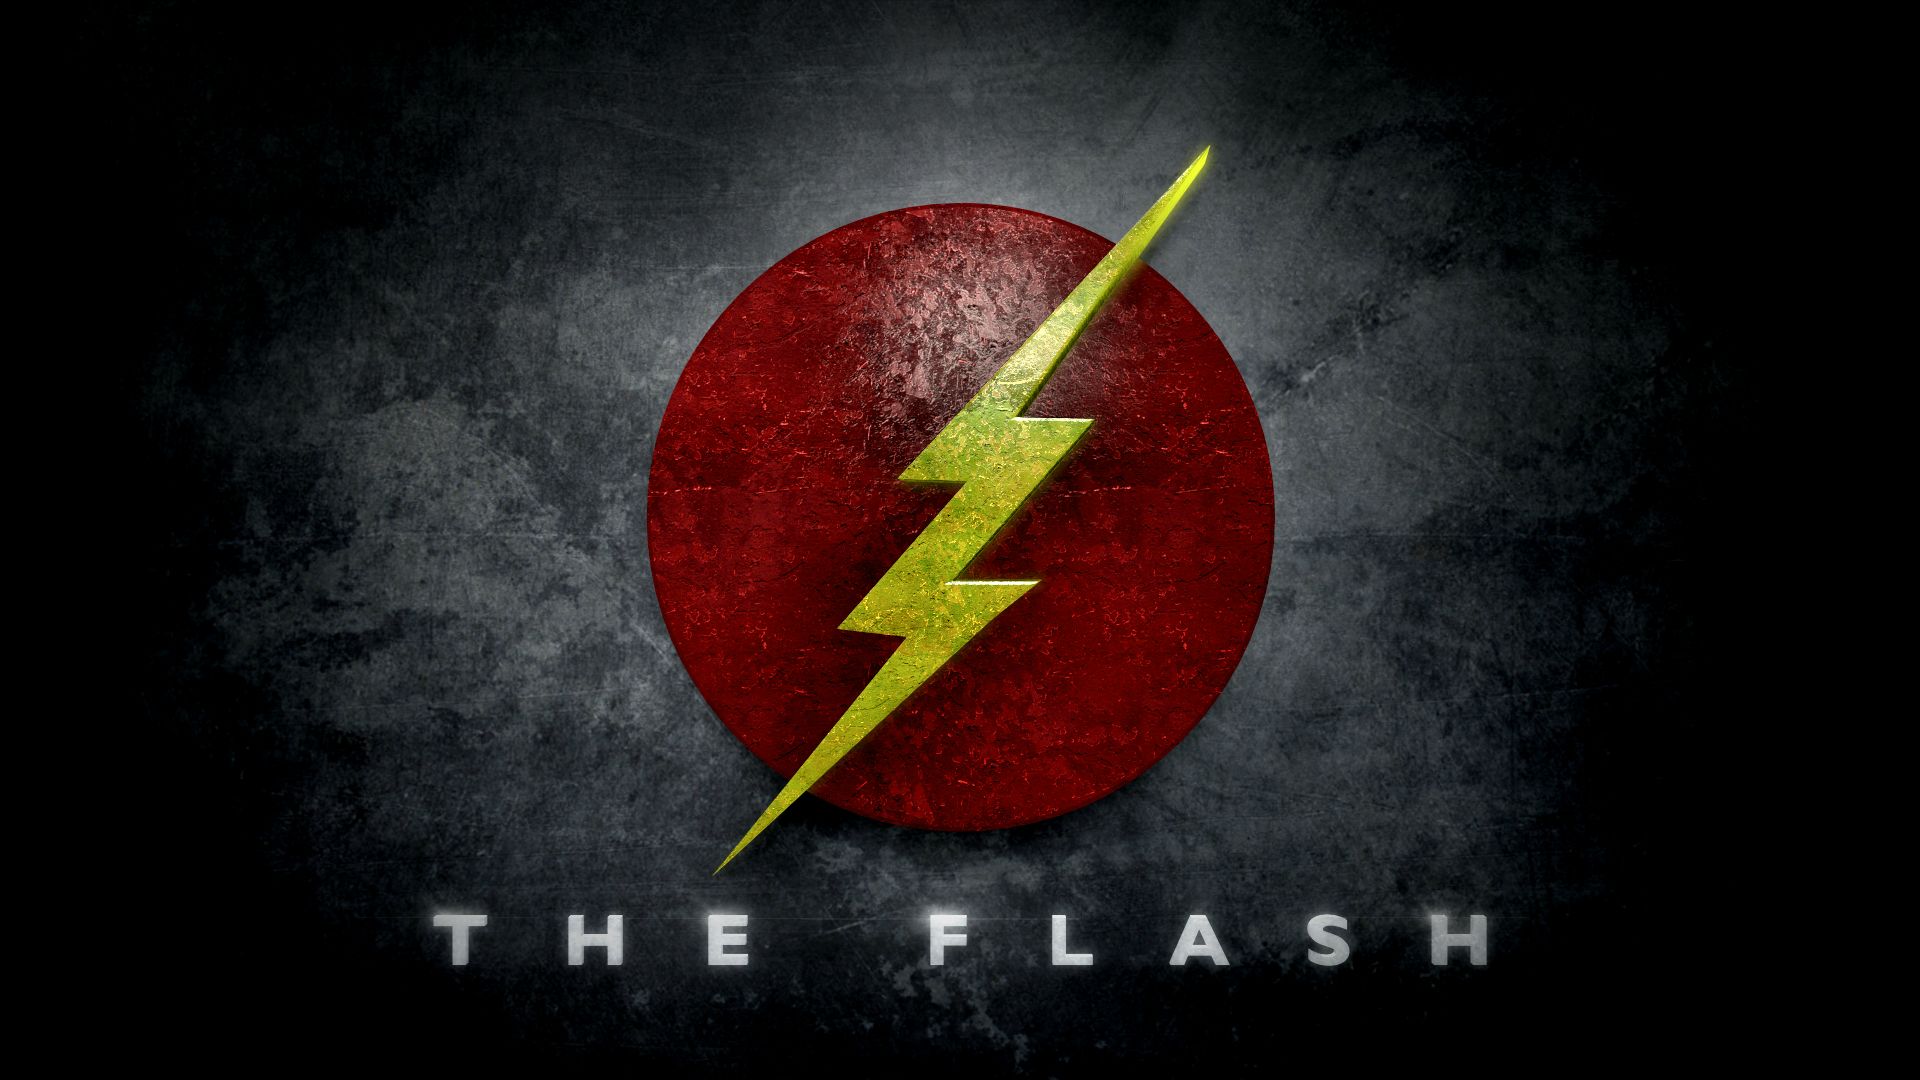 The Flash Logo Wallpaper Hd image gallery